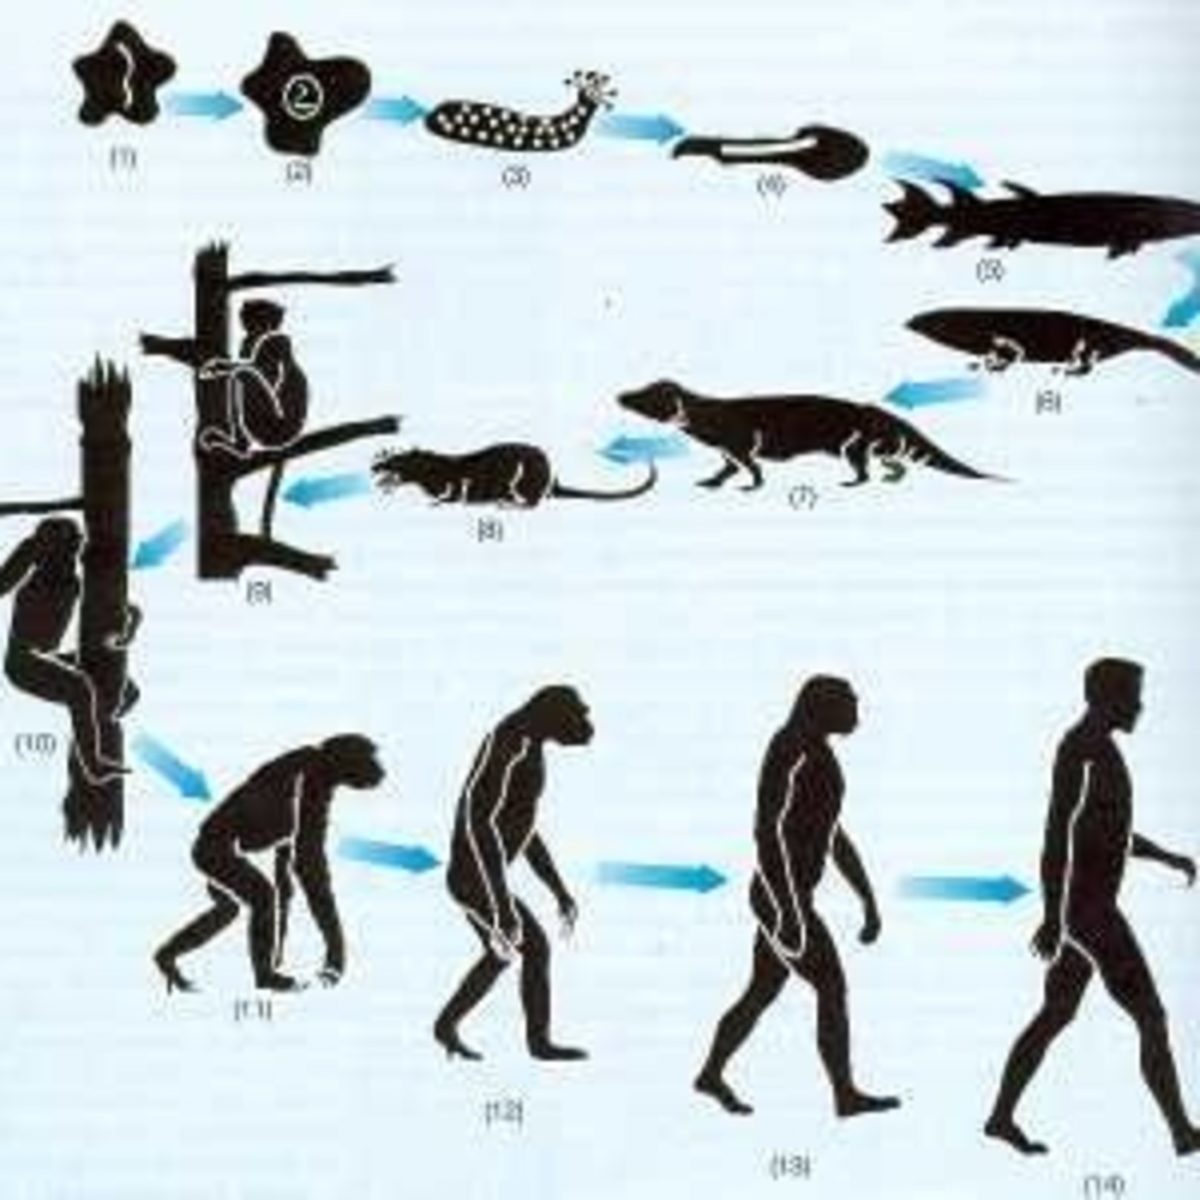 Teor As De La Evoluci N Y Origen De La Vida Timeline Timetoast Timelines Sexiz Pix